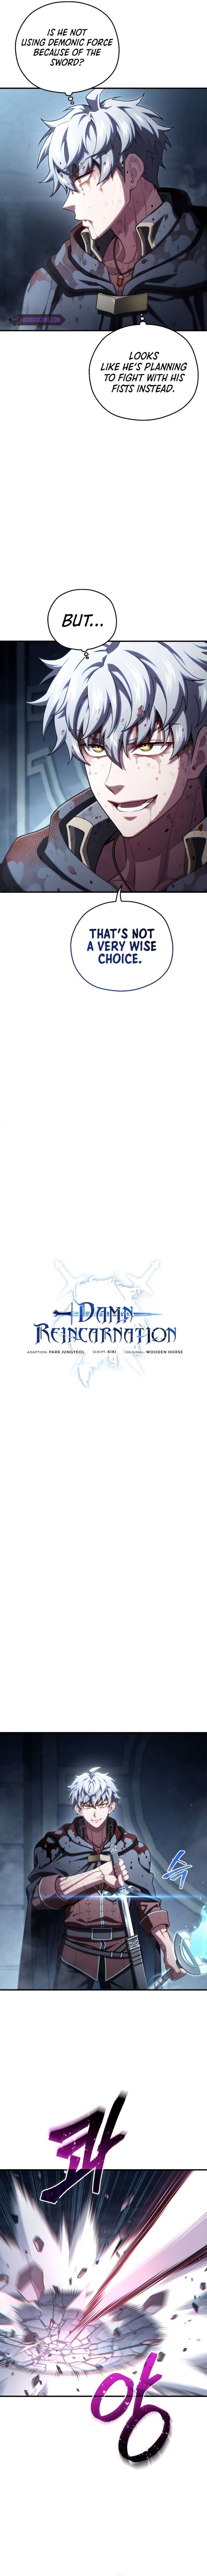 Damn Reincarnation Chapter 63 Page 3